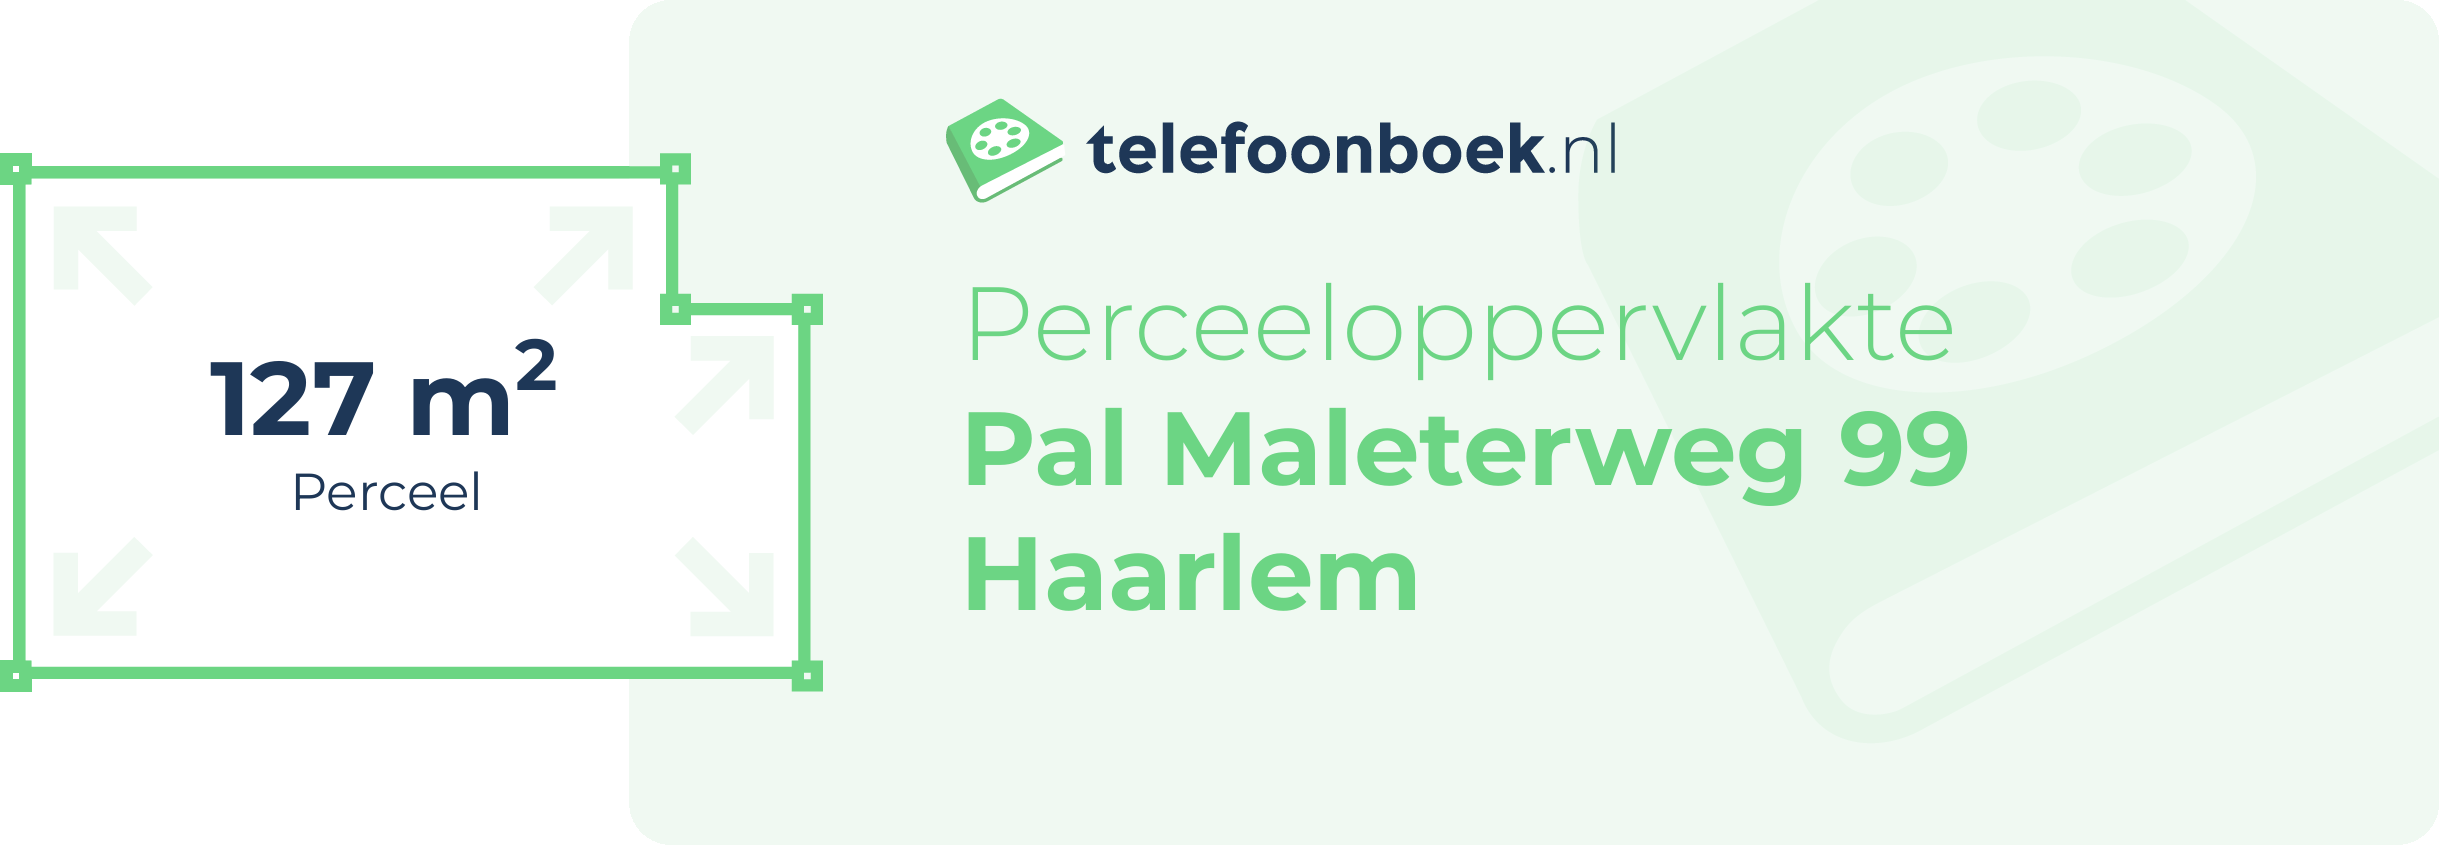 Perceeloppervlakte Pal Maleterweg 99 Haarlem